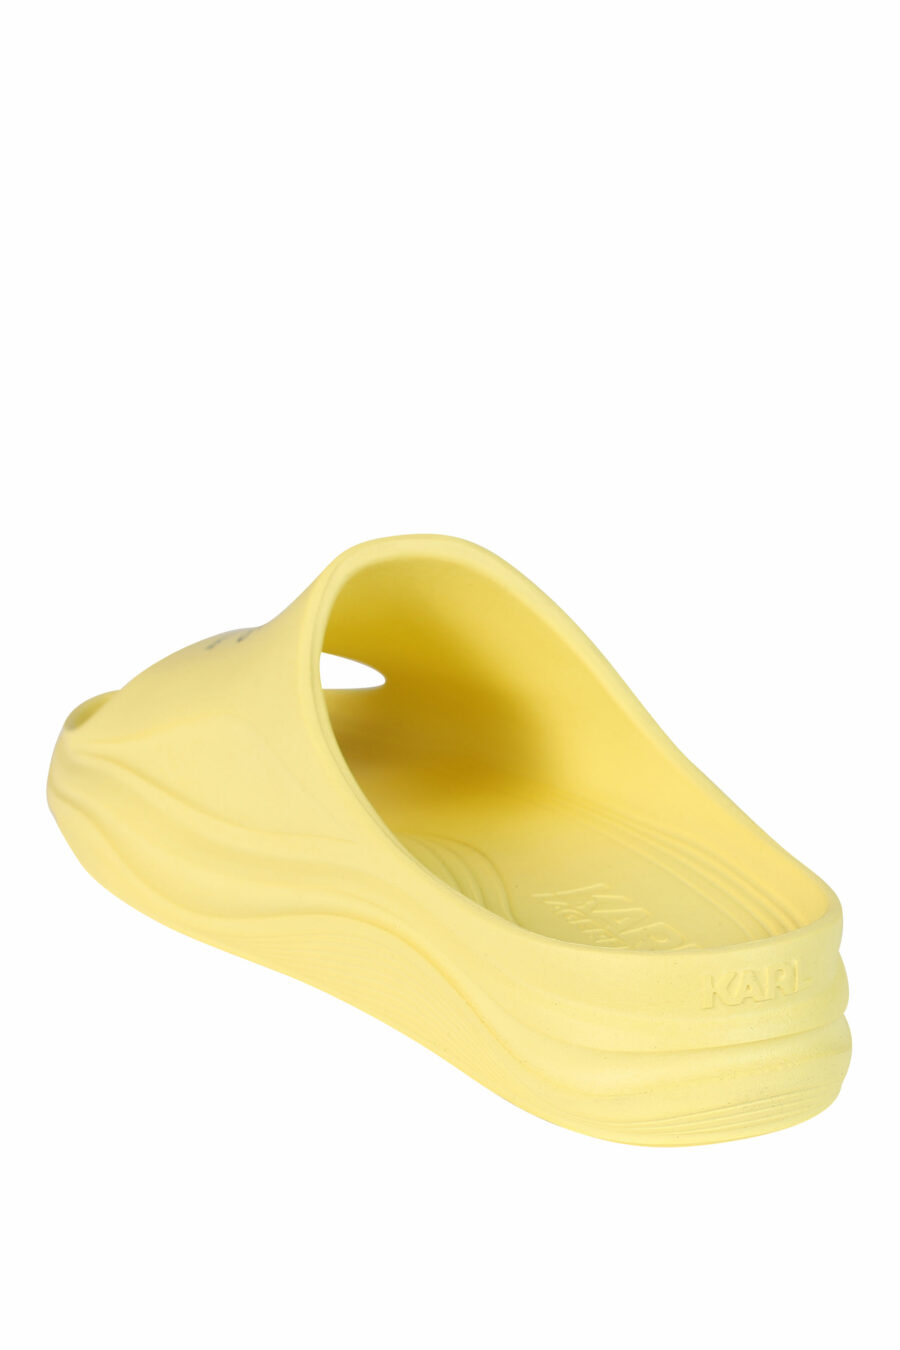 Sandalias amarillas "skoona" con logo - 5059529246012 4